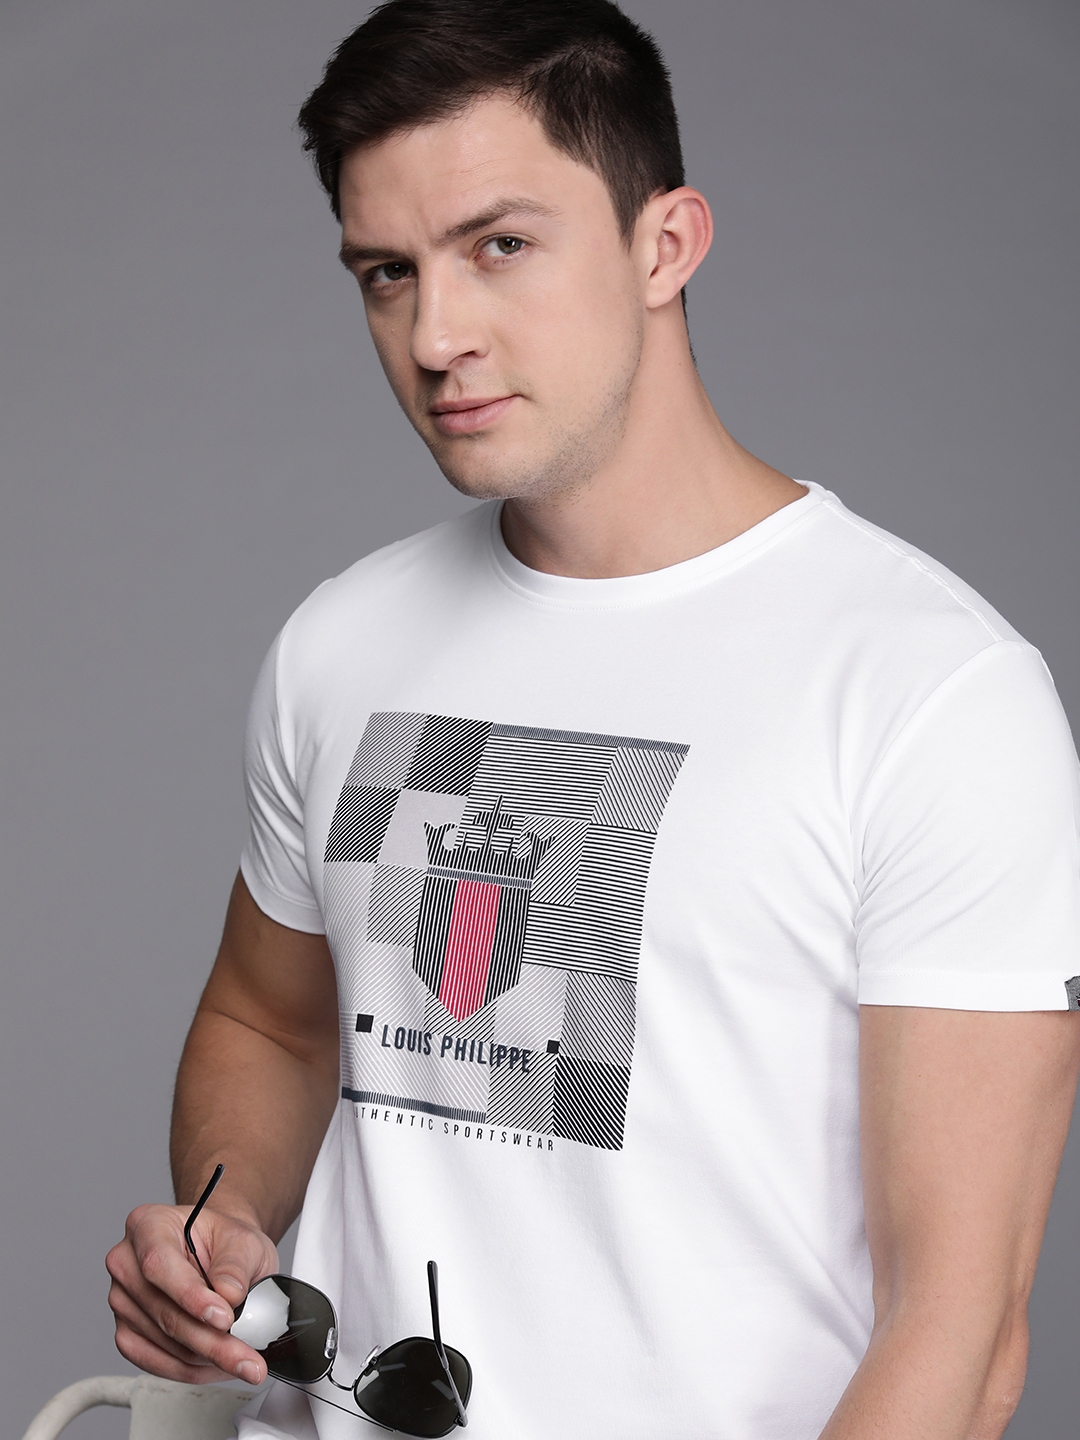 T-Shirts & Shirts, Louis Philippe Shirt For Men